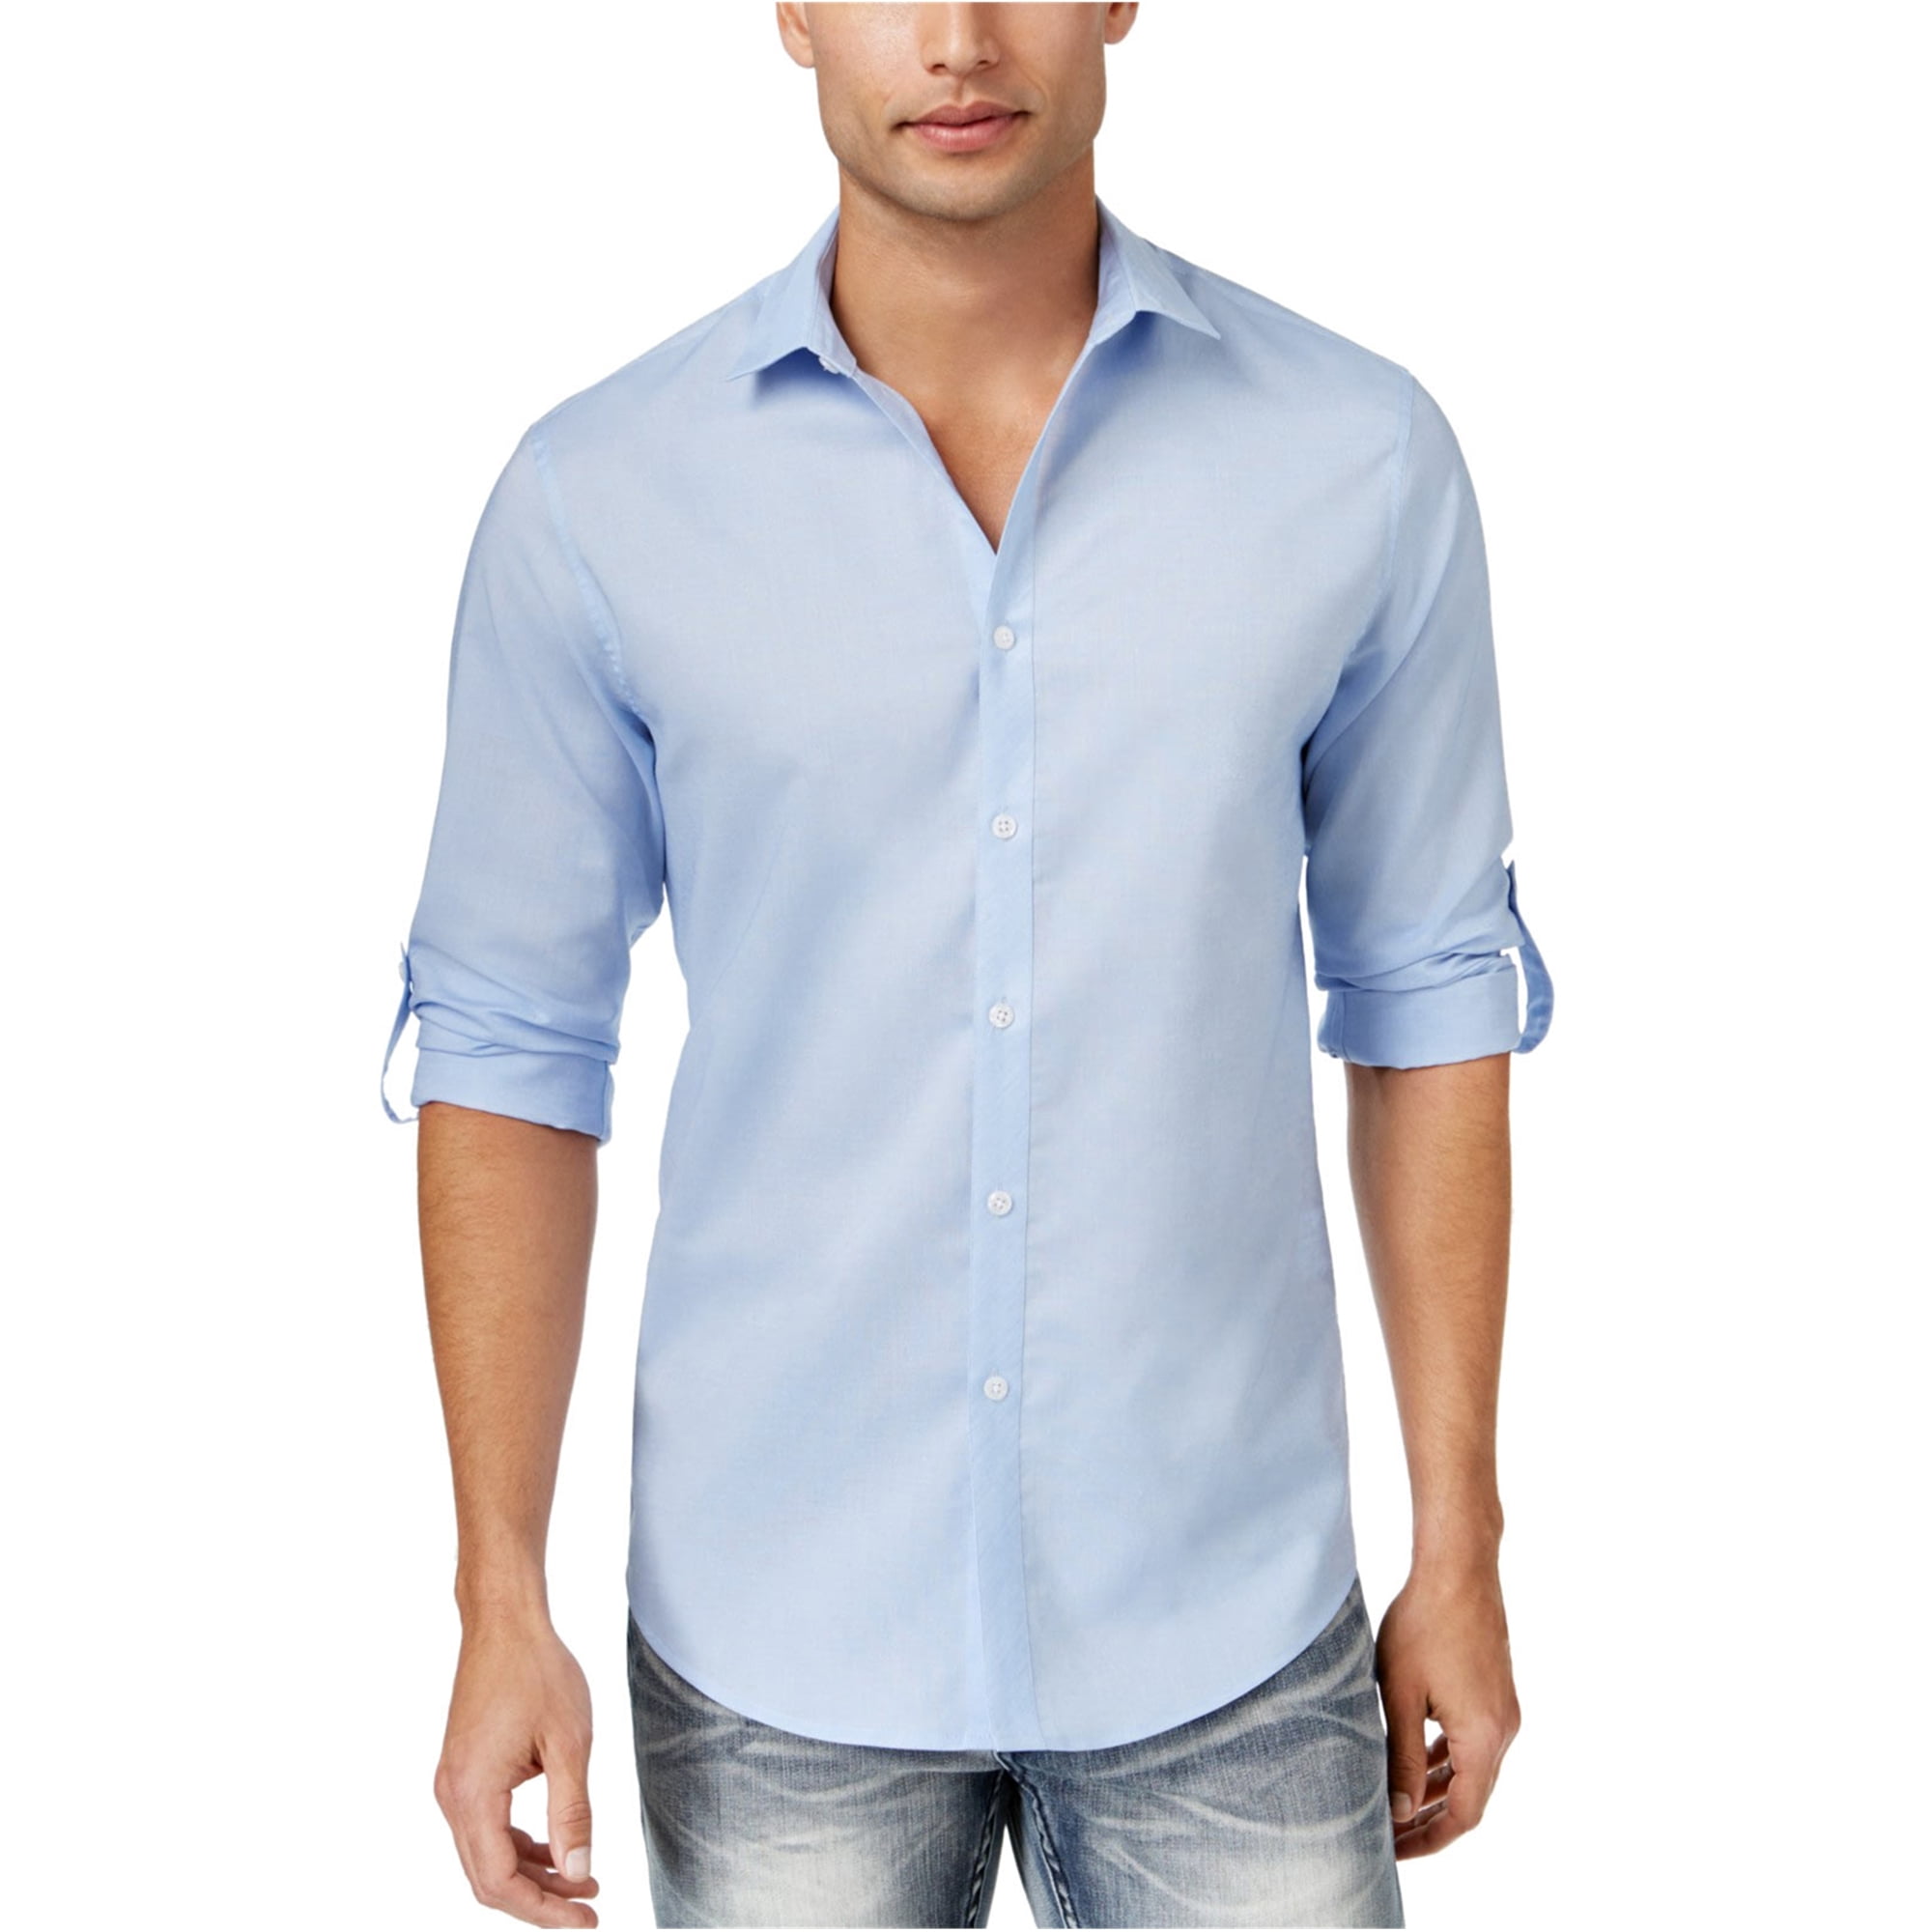 I-N-C Mens Roll-Tab Button Up Shirt, Blue, Small - Walmart.com